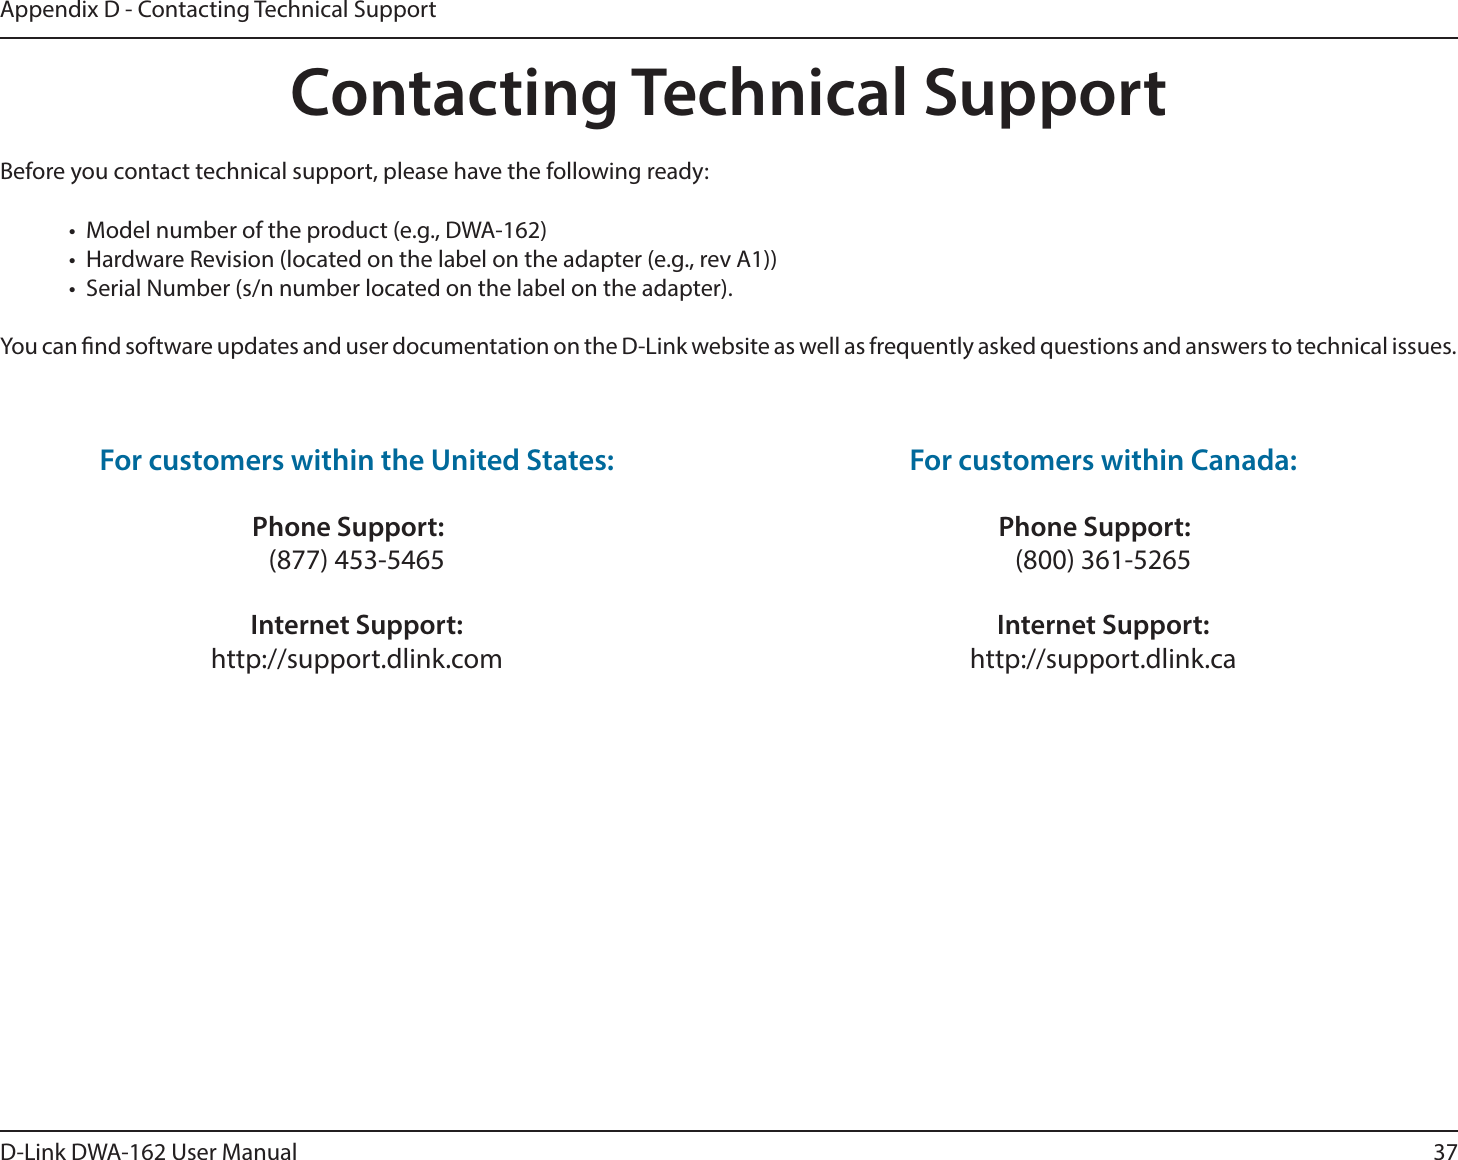 37D-Link DWA-162 User ManualAppendix D - Contacting Technical SupportContacting Technical SupportBefore you contact technical support, please have the following ready:t .PEFMOVNCFSPGUIFQSPEVDUFH%8&quot;t )BSEXBSF3FWJTJPOMPDBUFEPOUIFMBCFMPOUIFBEBQUFSFHSFW&quot;t 4FSJBM/VNCFSTOOVNCFSMPDBUFEPOUIFMBCFMPOUIFBEBQUFS:PVDBOöOETPGUXBSFVQEBUFTBOEVTFSEPDVNFOUBUJPOPOUIF%-JOLXFCTJUFBTXFMMBTGSFRVFOUMZBTLFERVFTUJPOTBOEBOTXFSTUPUFDIOJDBMJTTVFTFor customers within the United States: Phone Support: (877) 453-5465 Internet Support: http://support.dlink.com For customers within Canada: Phone Support: (800) 361-5265   Internet Support: http://support.dlink.ca 